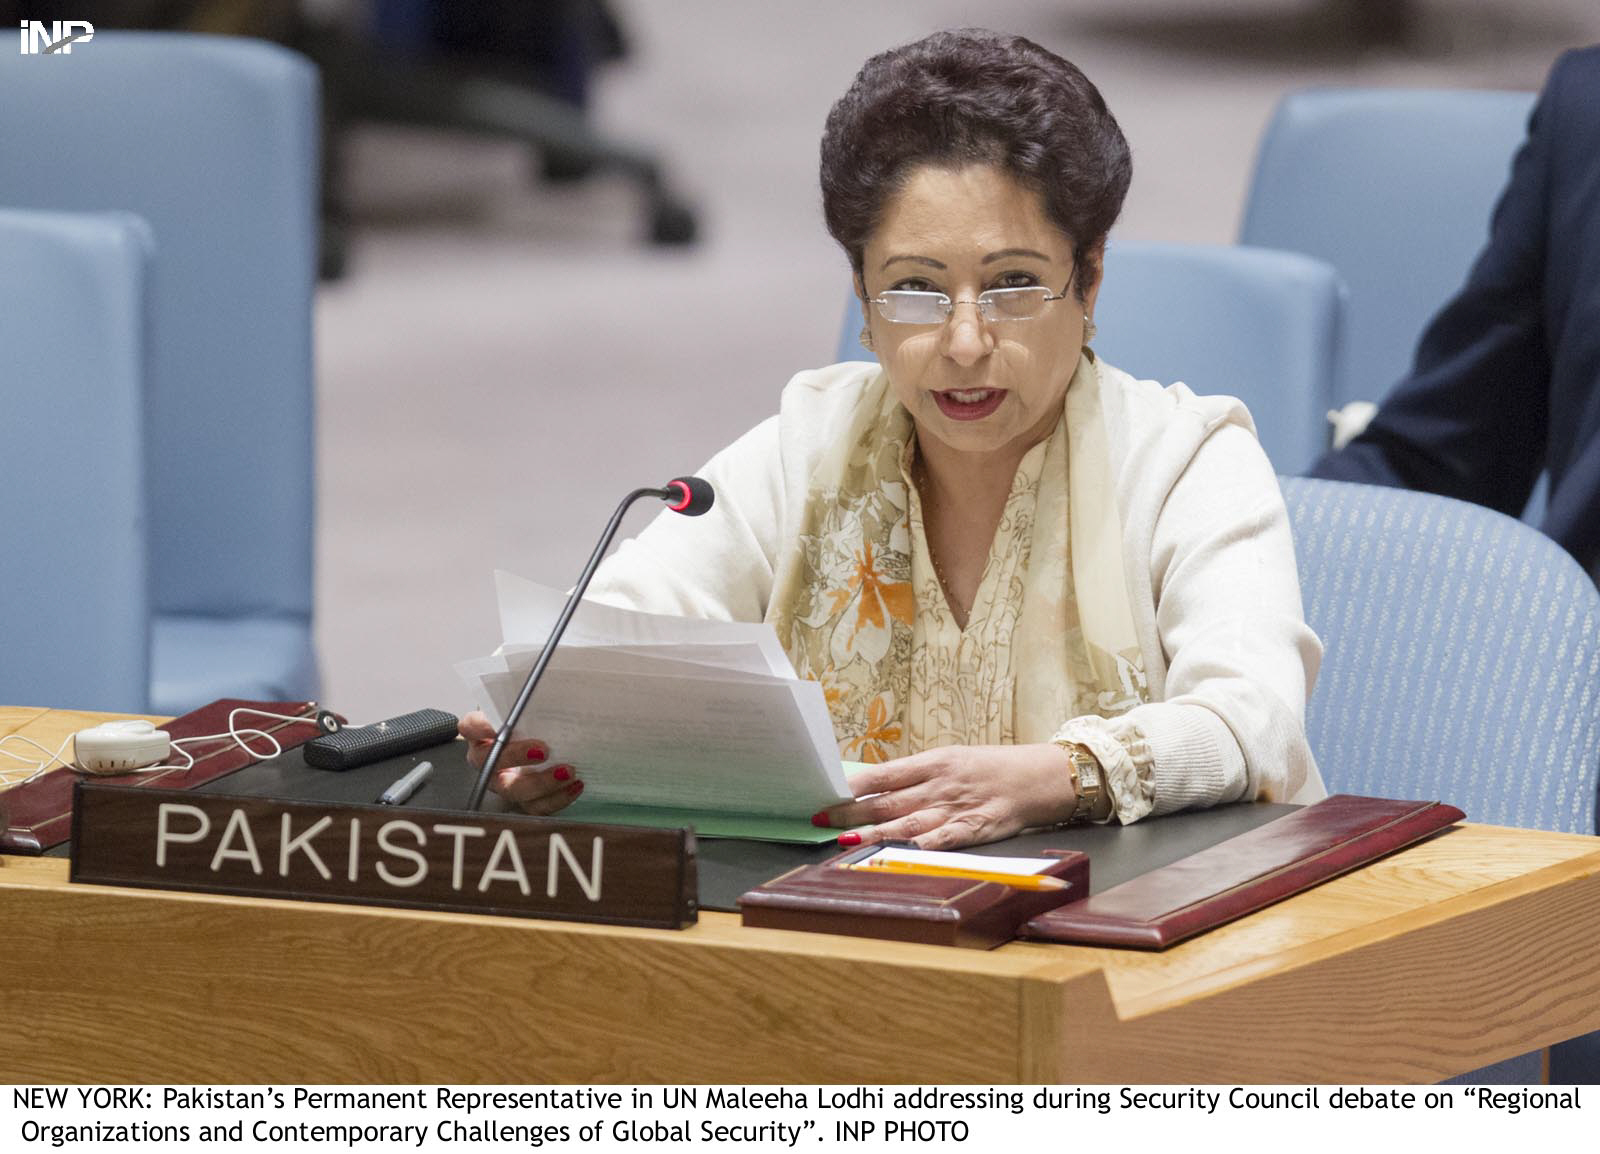 pakistan 039 s permanent representative in un maleeha lodhi addresses the security council photo inp